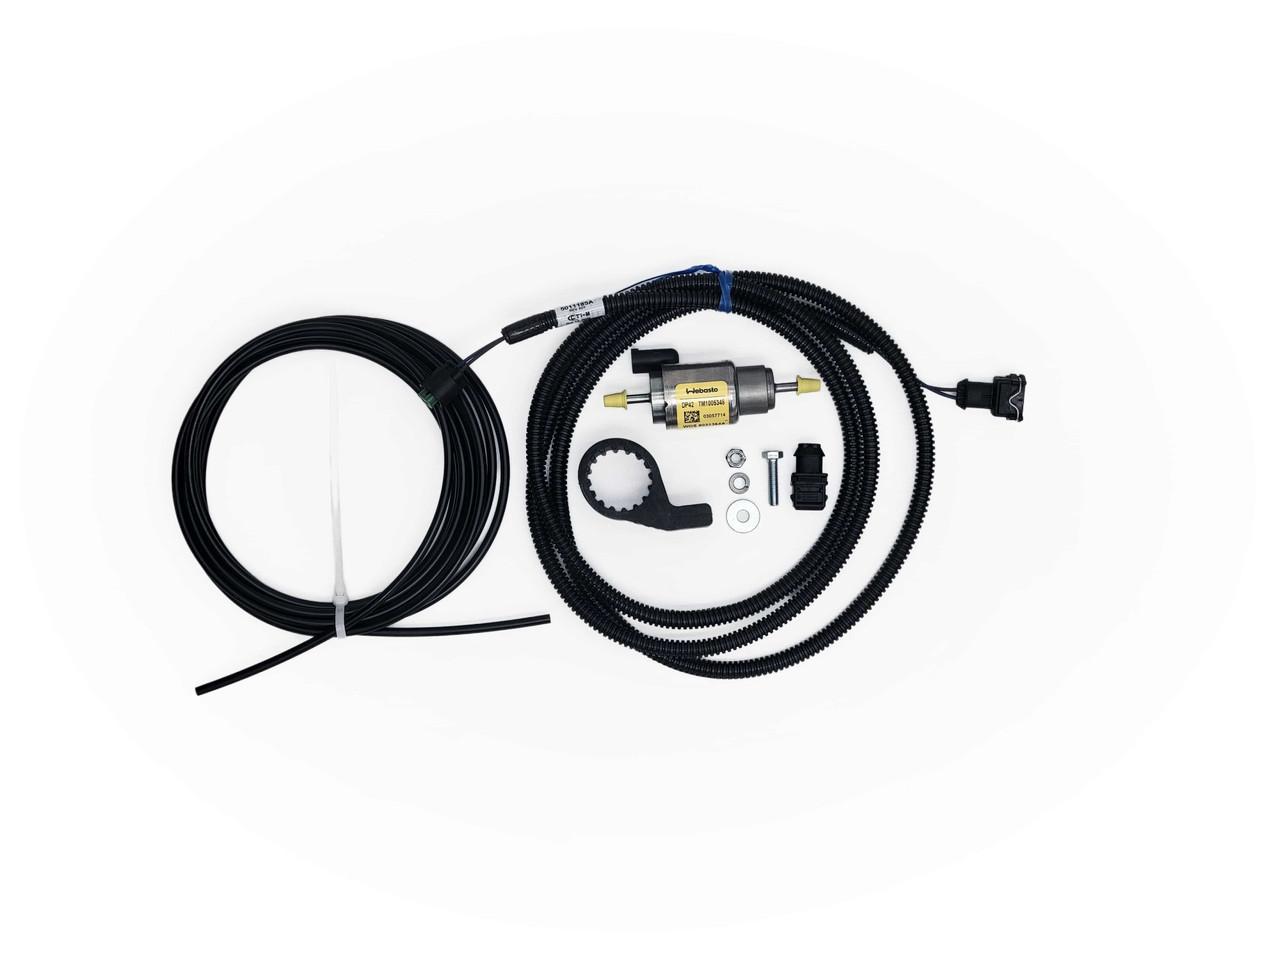 Webasto Air Top EVO 40 (12V) Gasoline Heater Kit